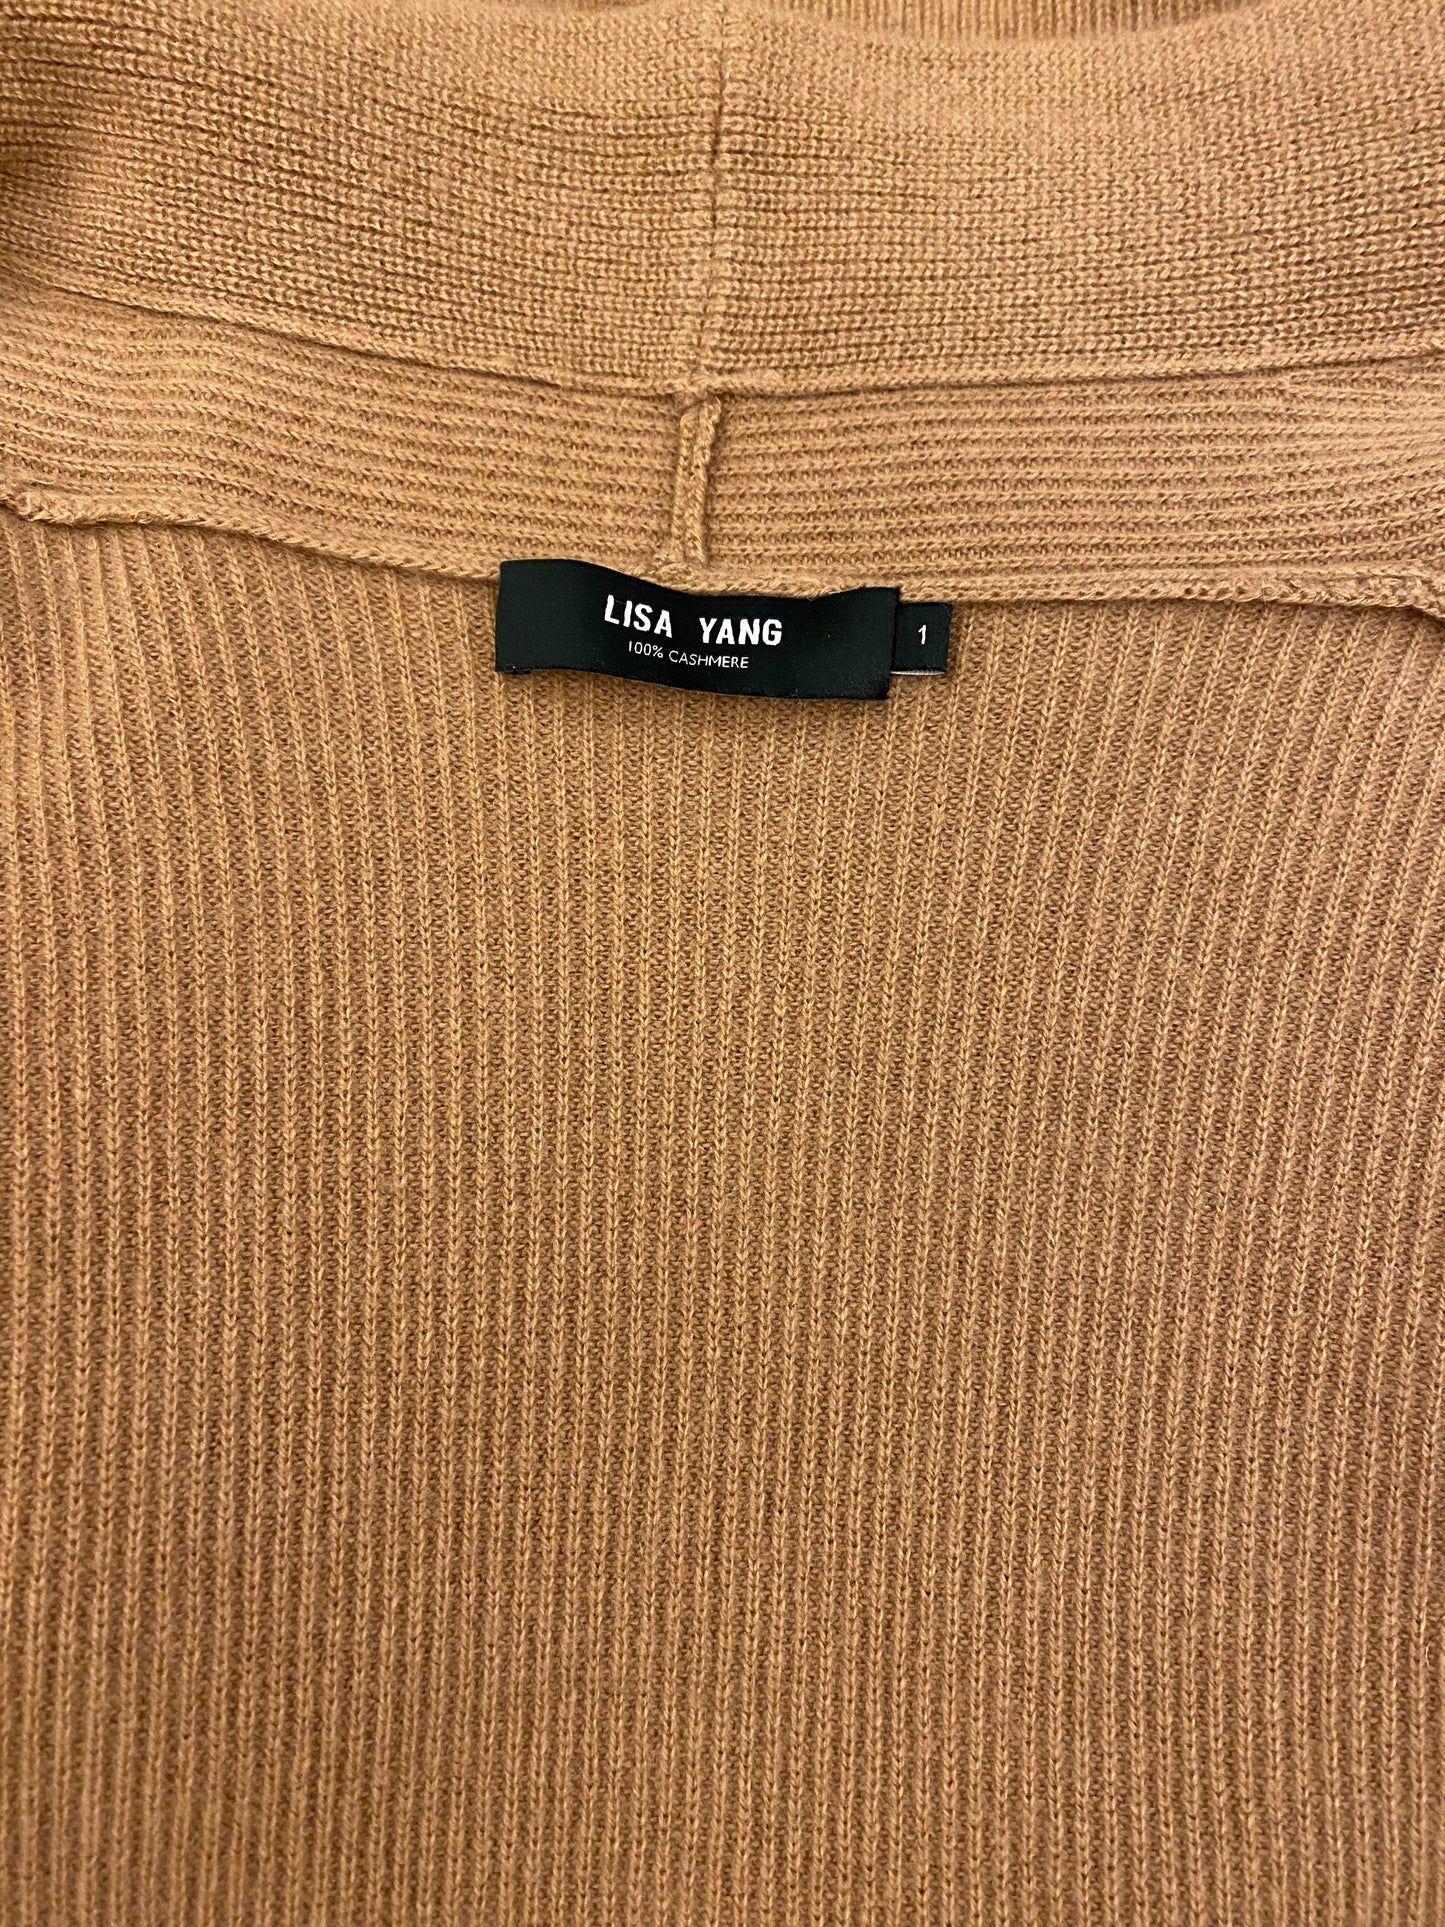 LISA YANG Cashmere Long Cardigan Size S/M